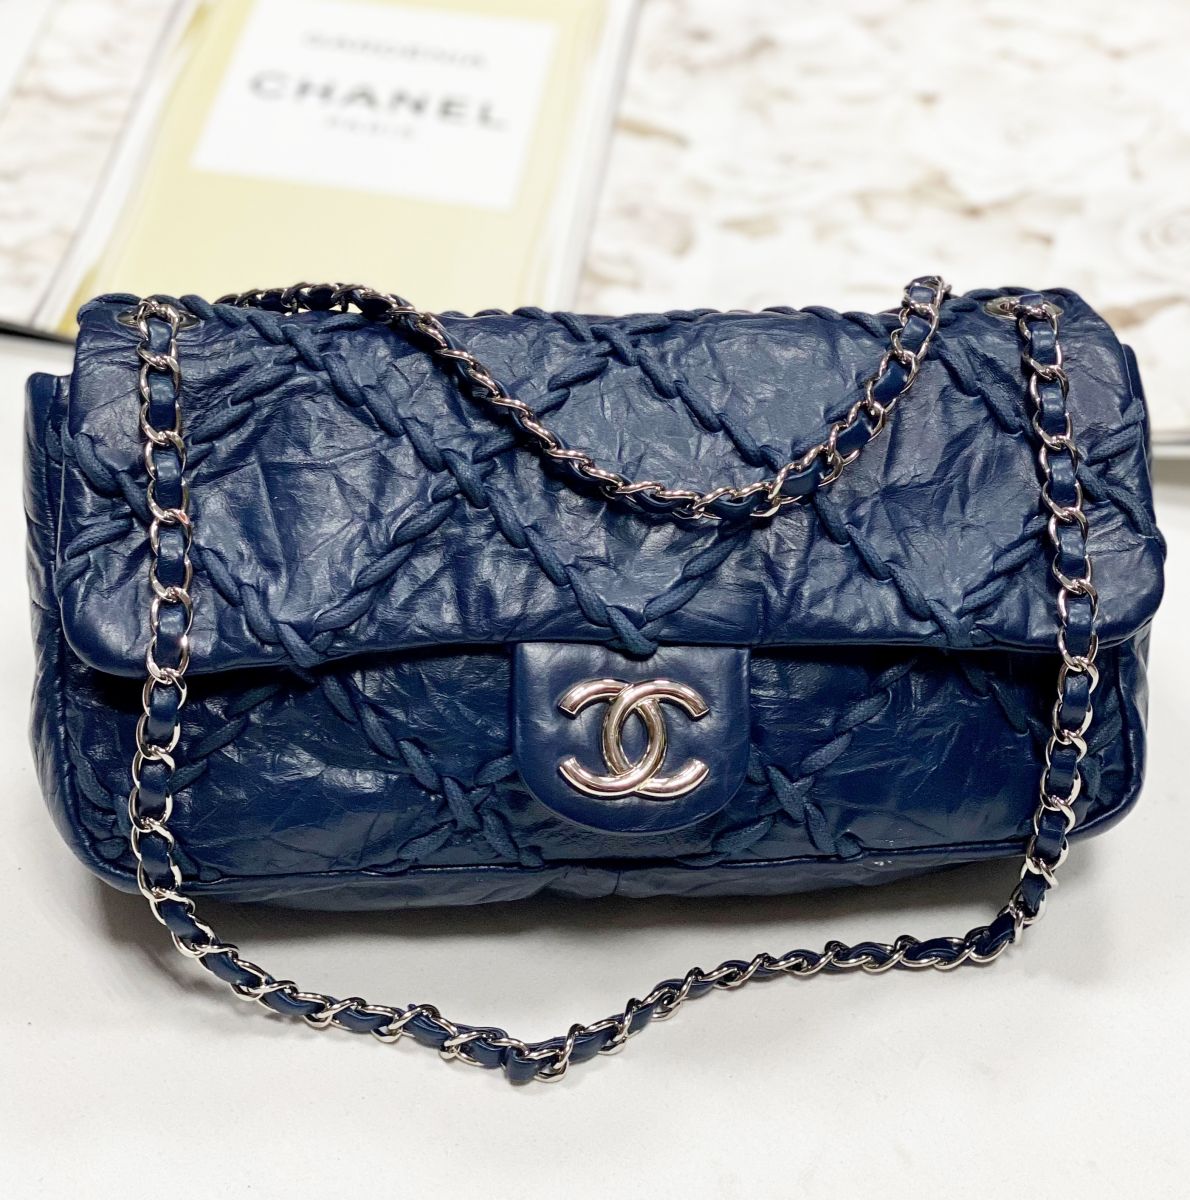 Сумка Chanel размер 30/17 цена 307 700 руб 